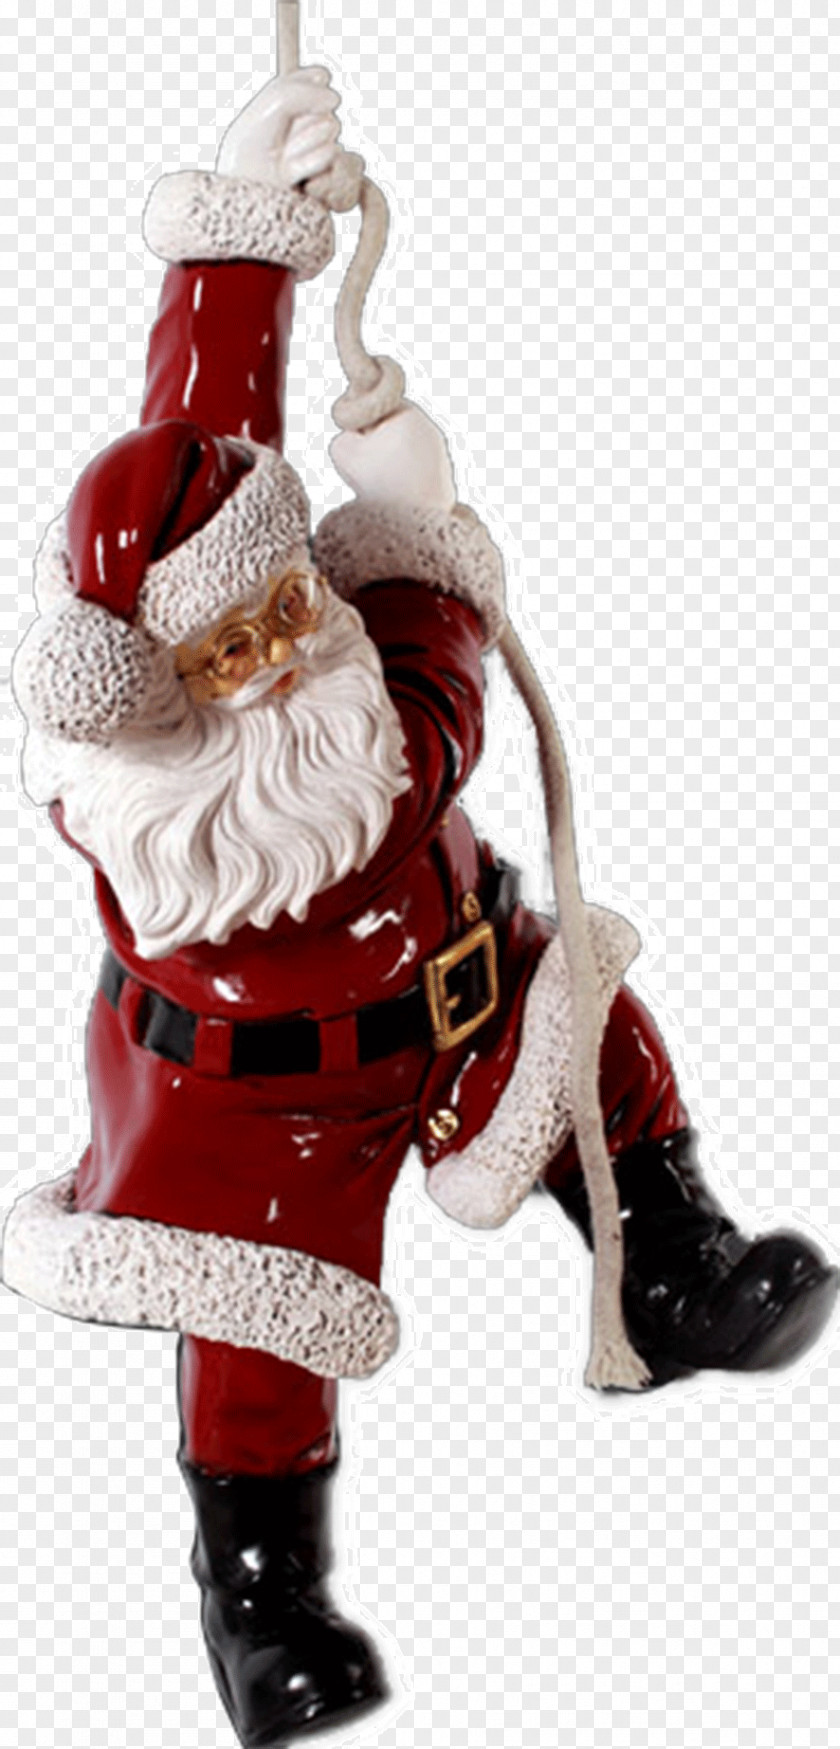 Santa Claus Candy Cane Christmas Ornament Decoration PNG